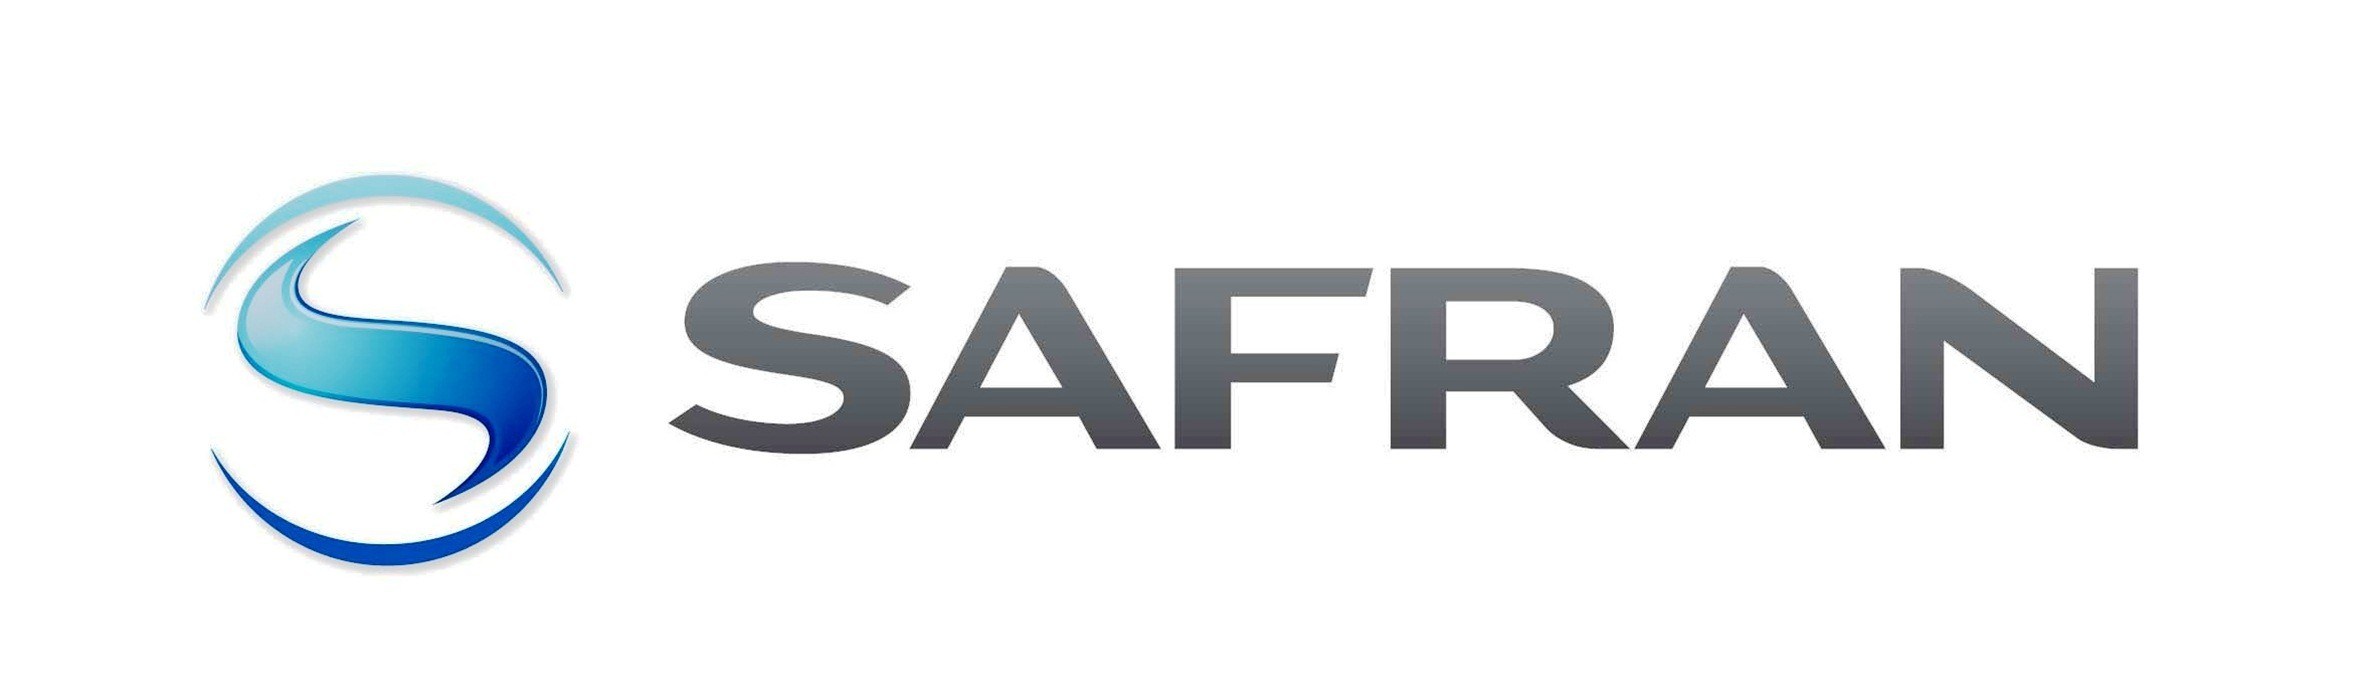 Safran Filtration Systems - SoFrance